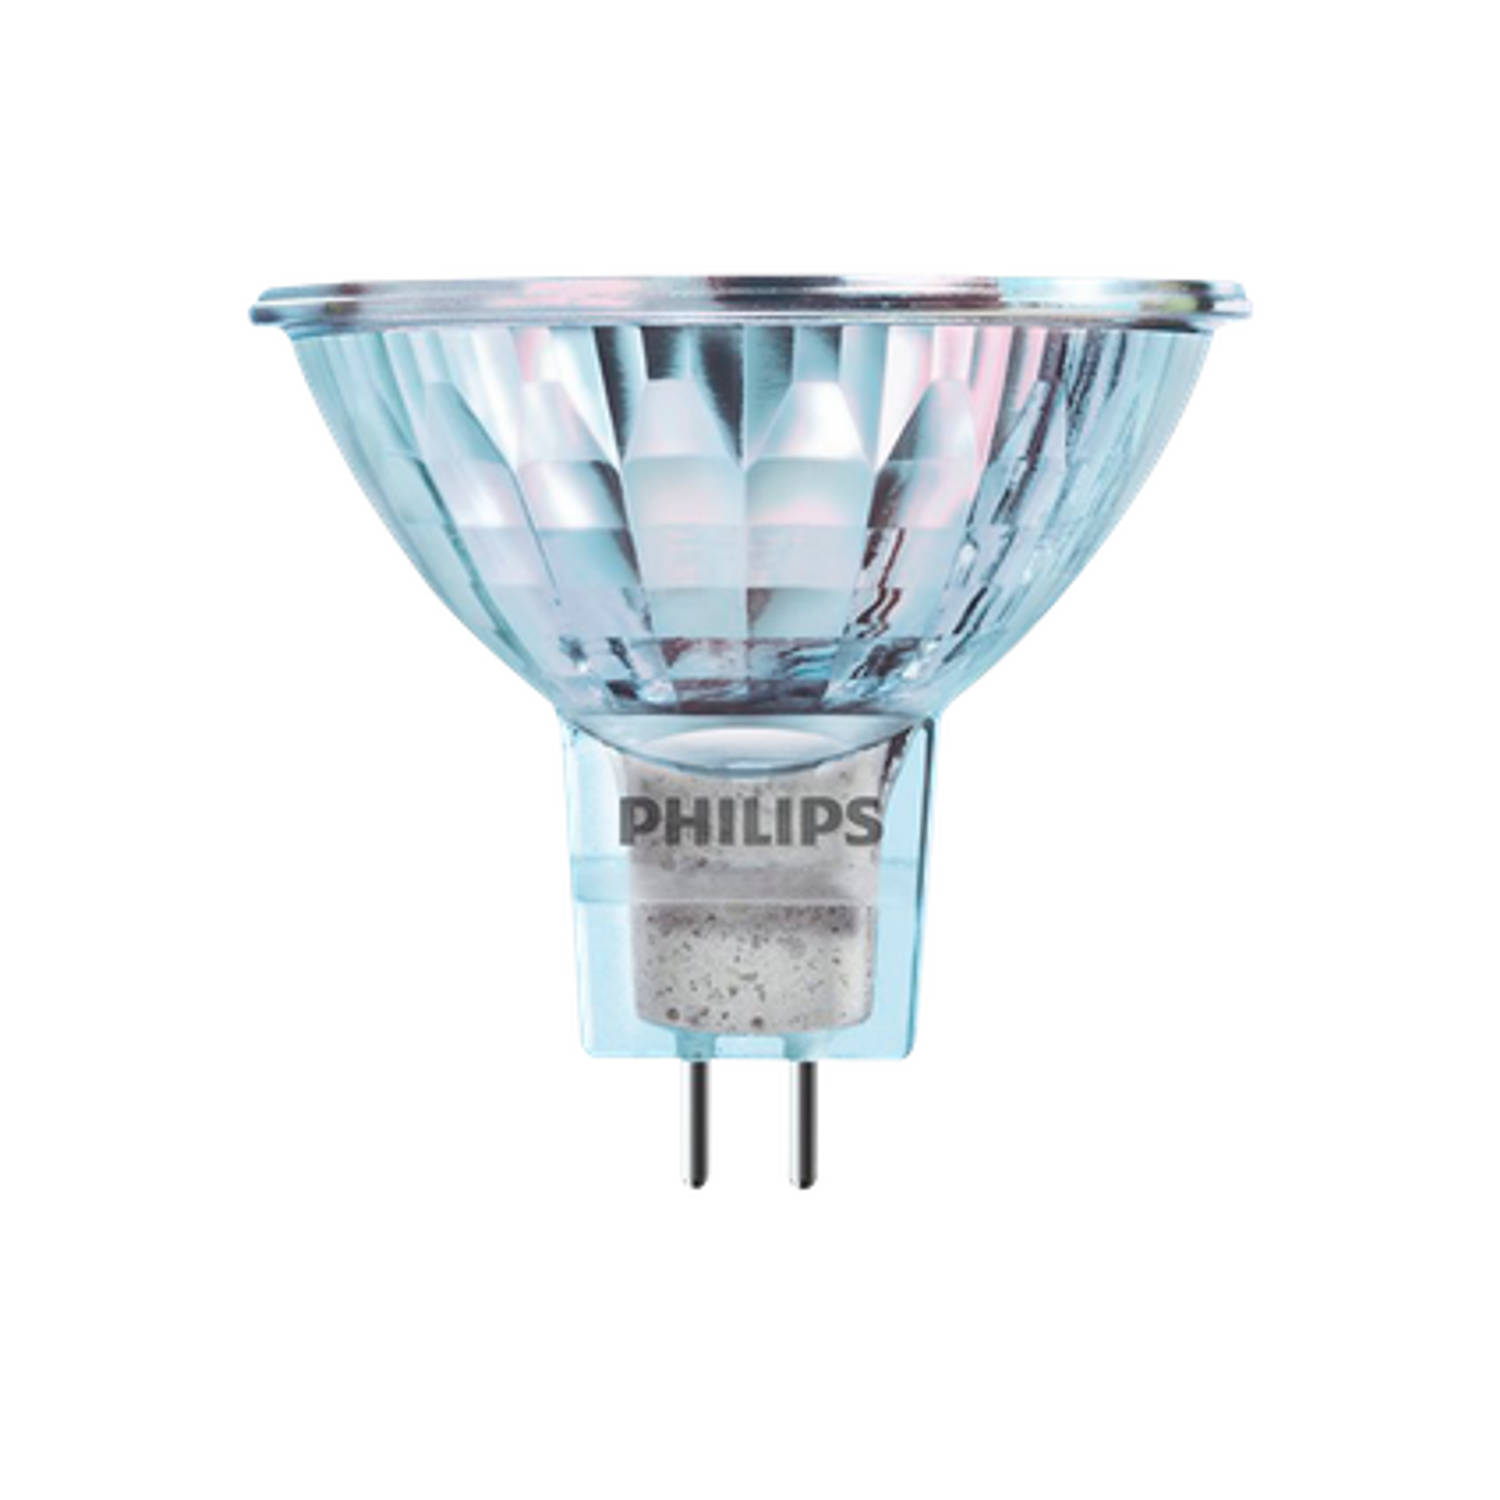 Philips Halogeen Reflector Mr16 20 Watt Gu5.3 Bls2